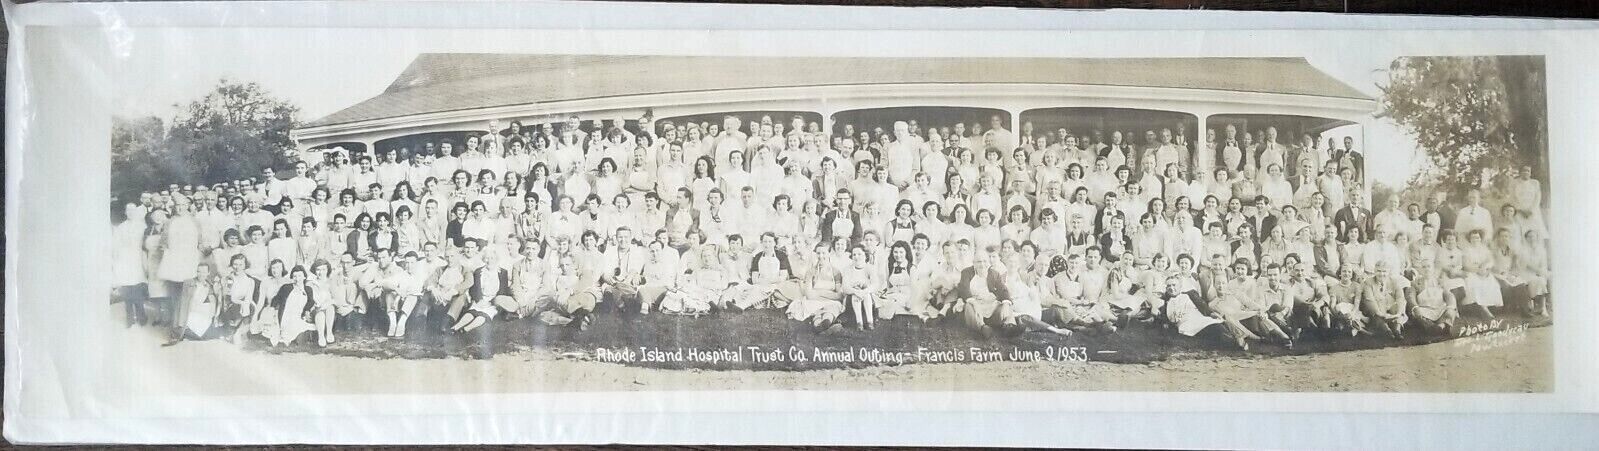 RI Rhode Island Hospital Trust Co. 1953 Annual Outing Francis Farm Vintage 33x8 